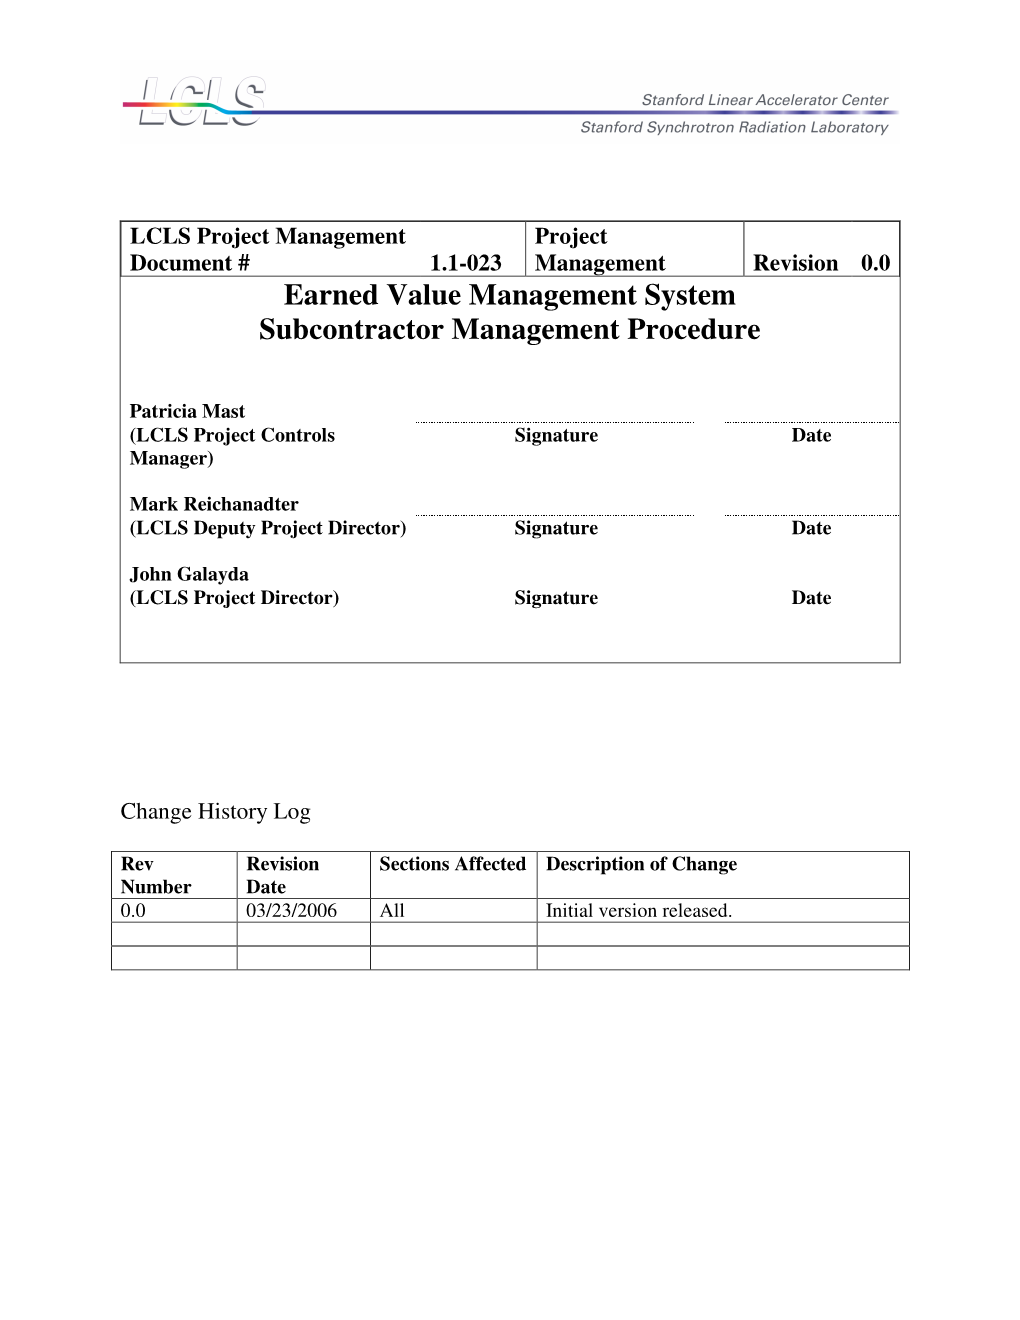 Earned Value Management System Subcontractor Management Procedure